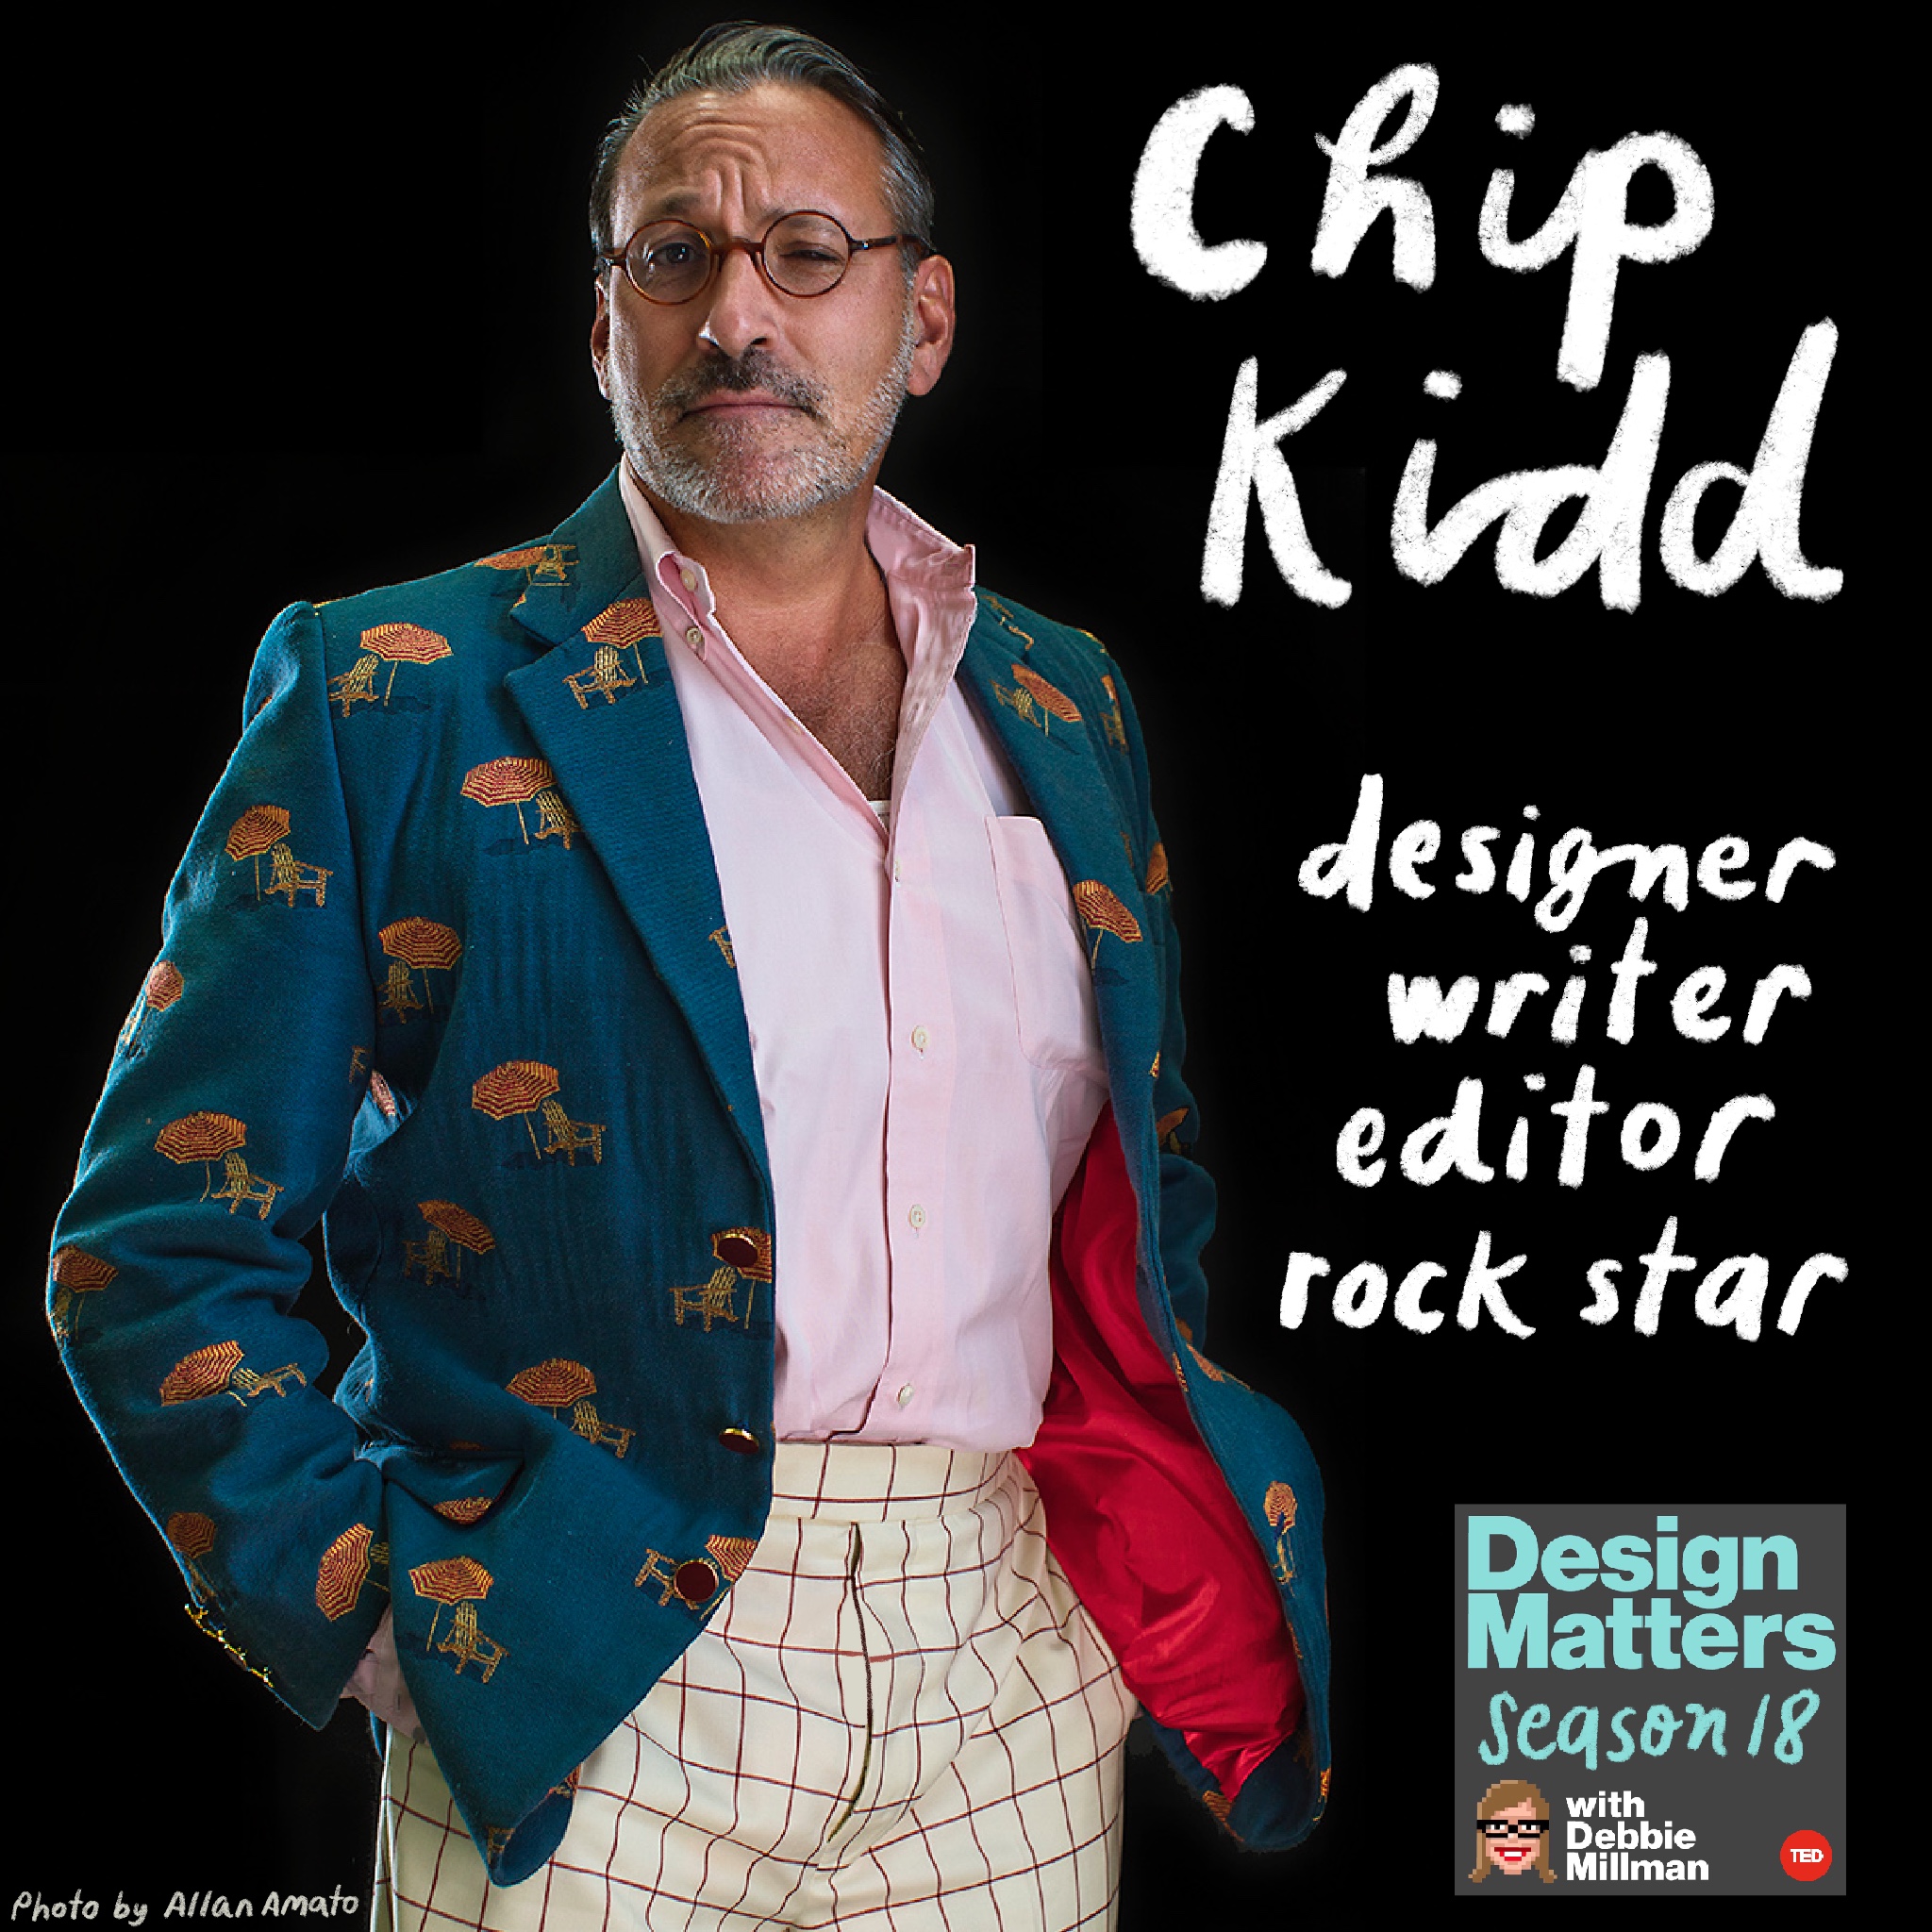 Thumbnail for "Chip Kidd".